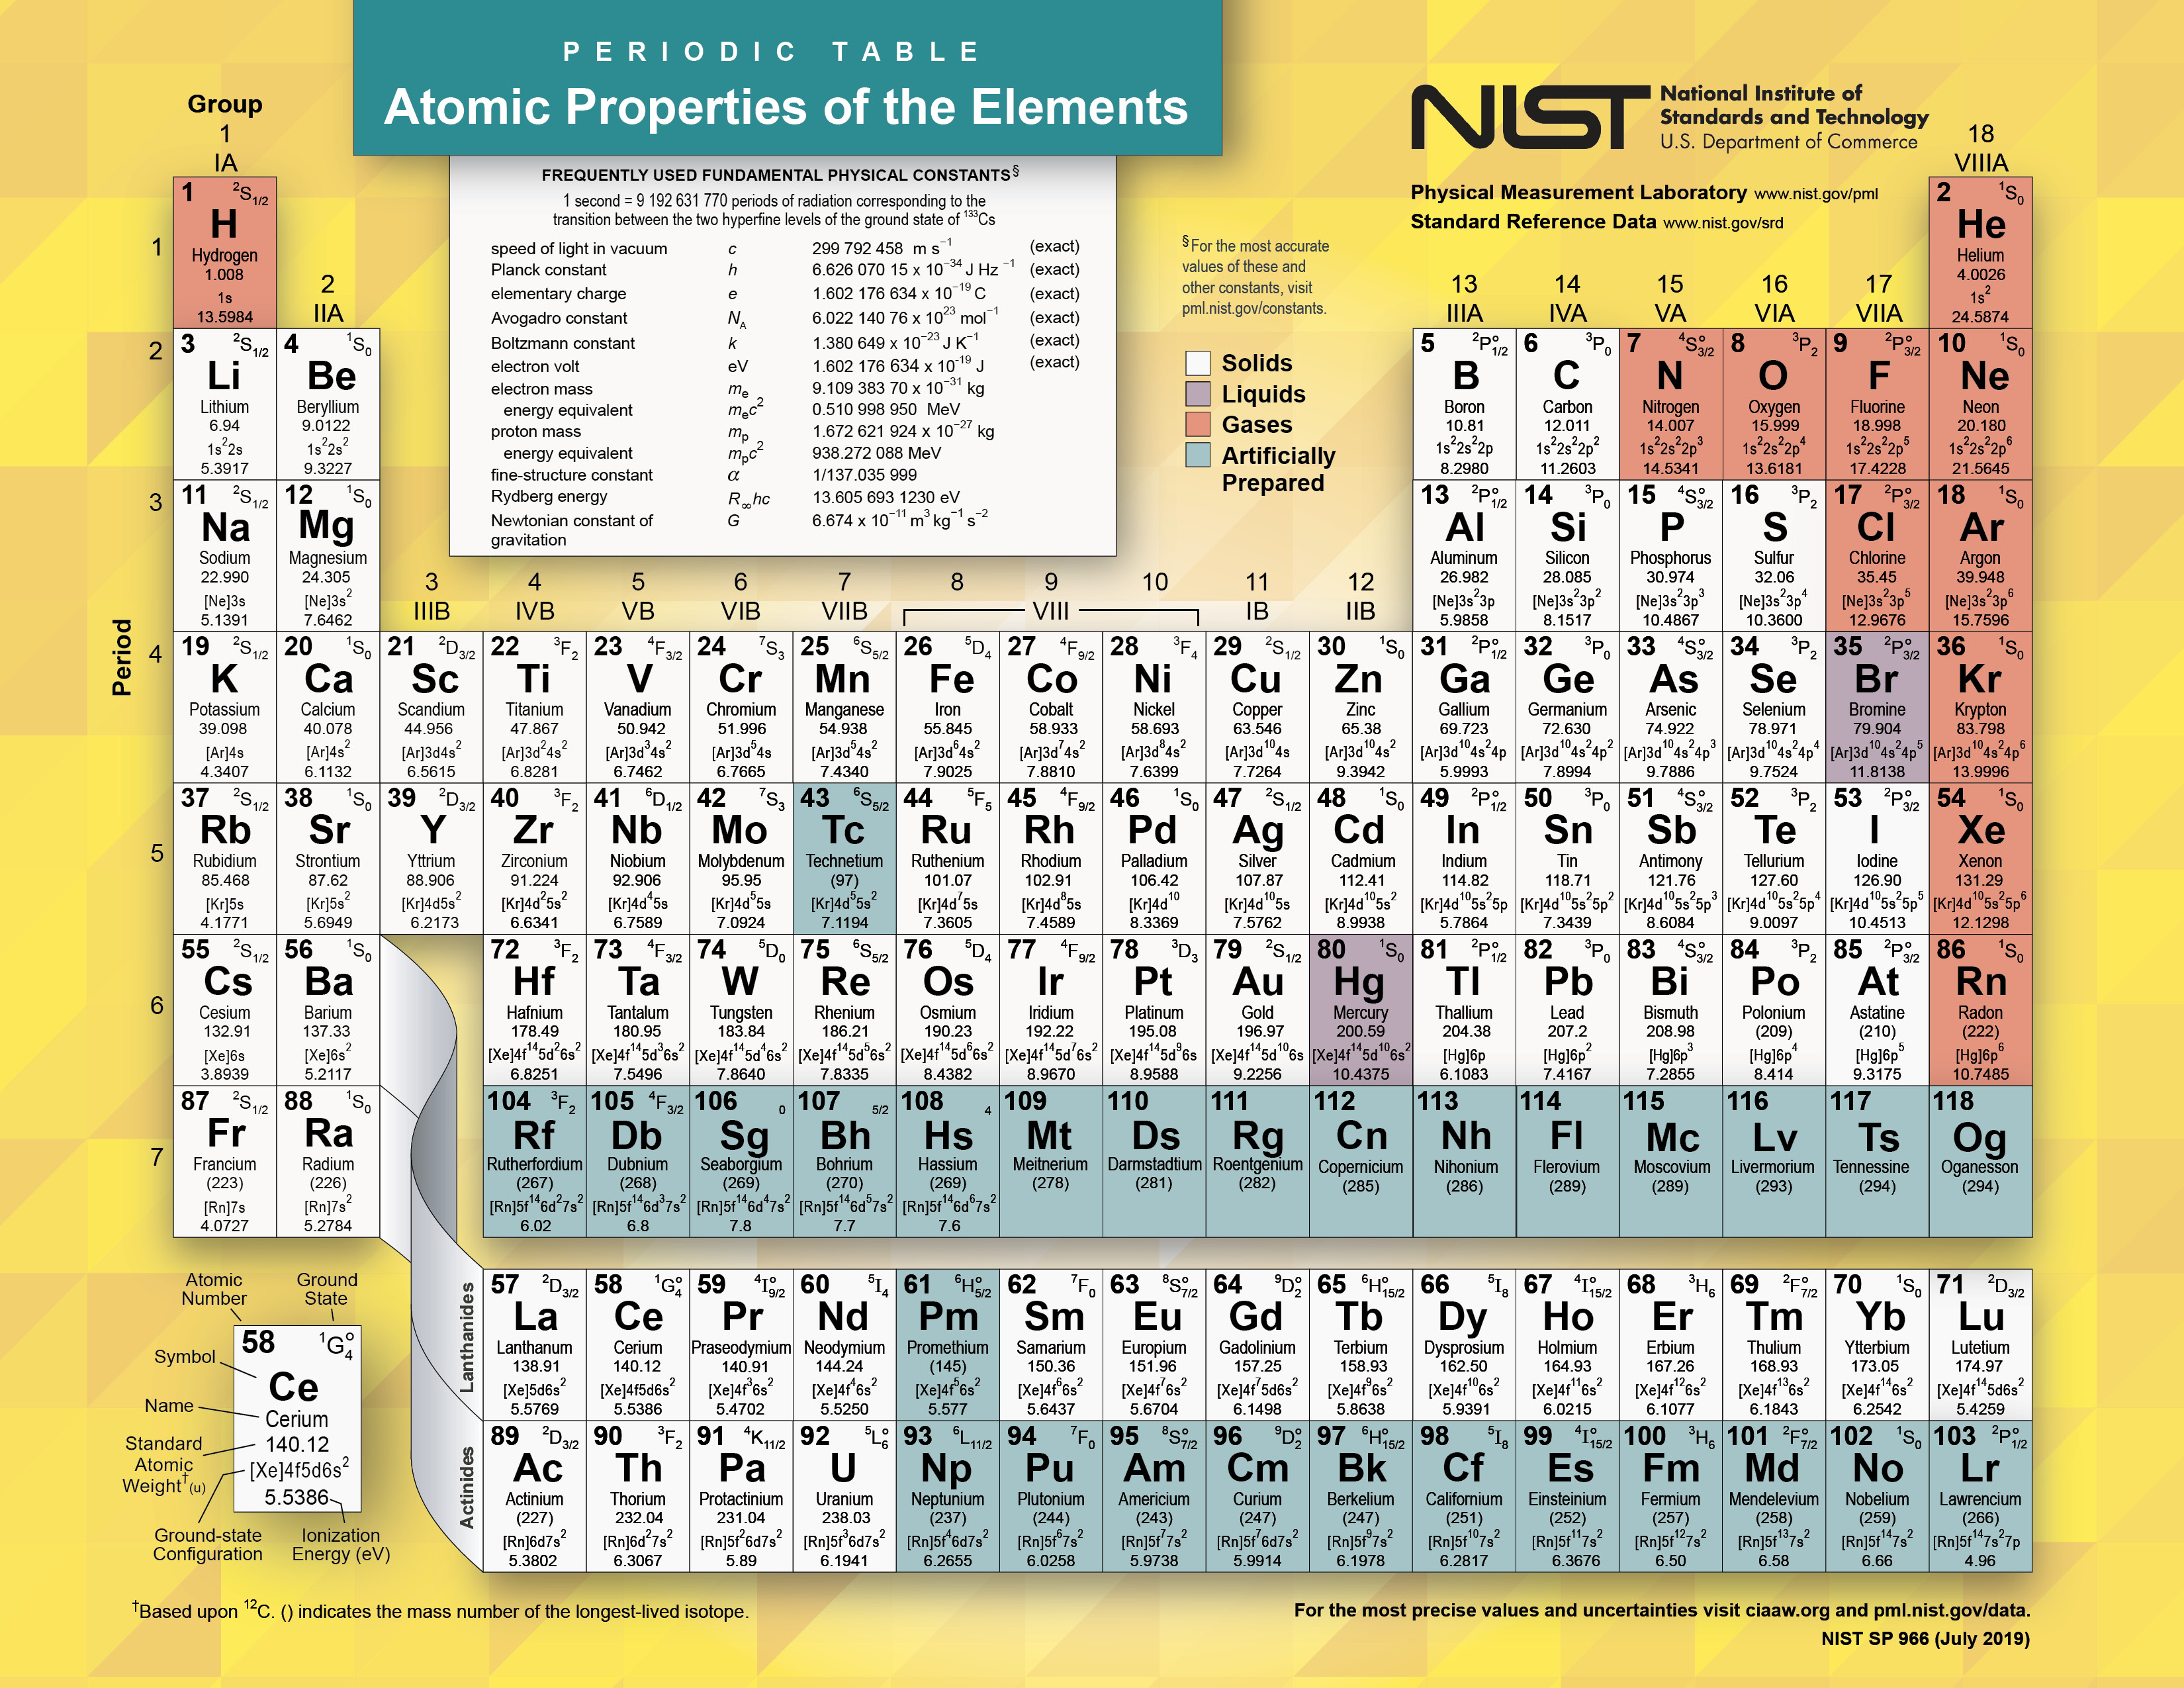 periodic table chemistry sudafedrine